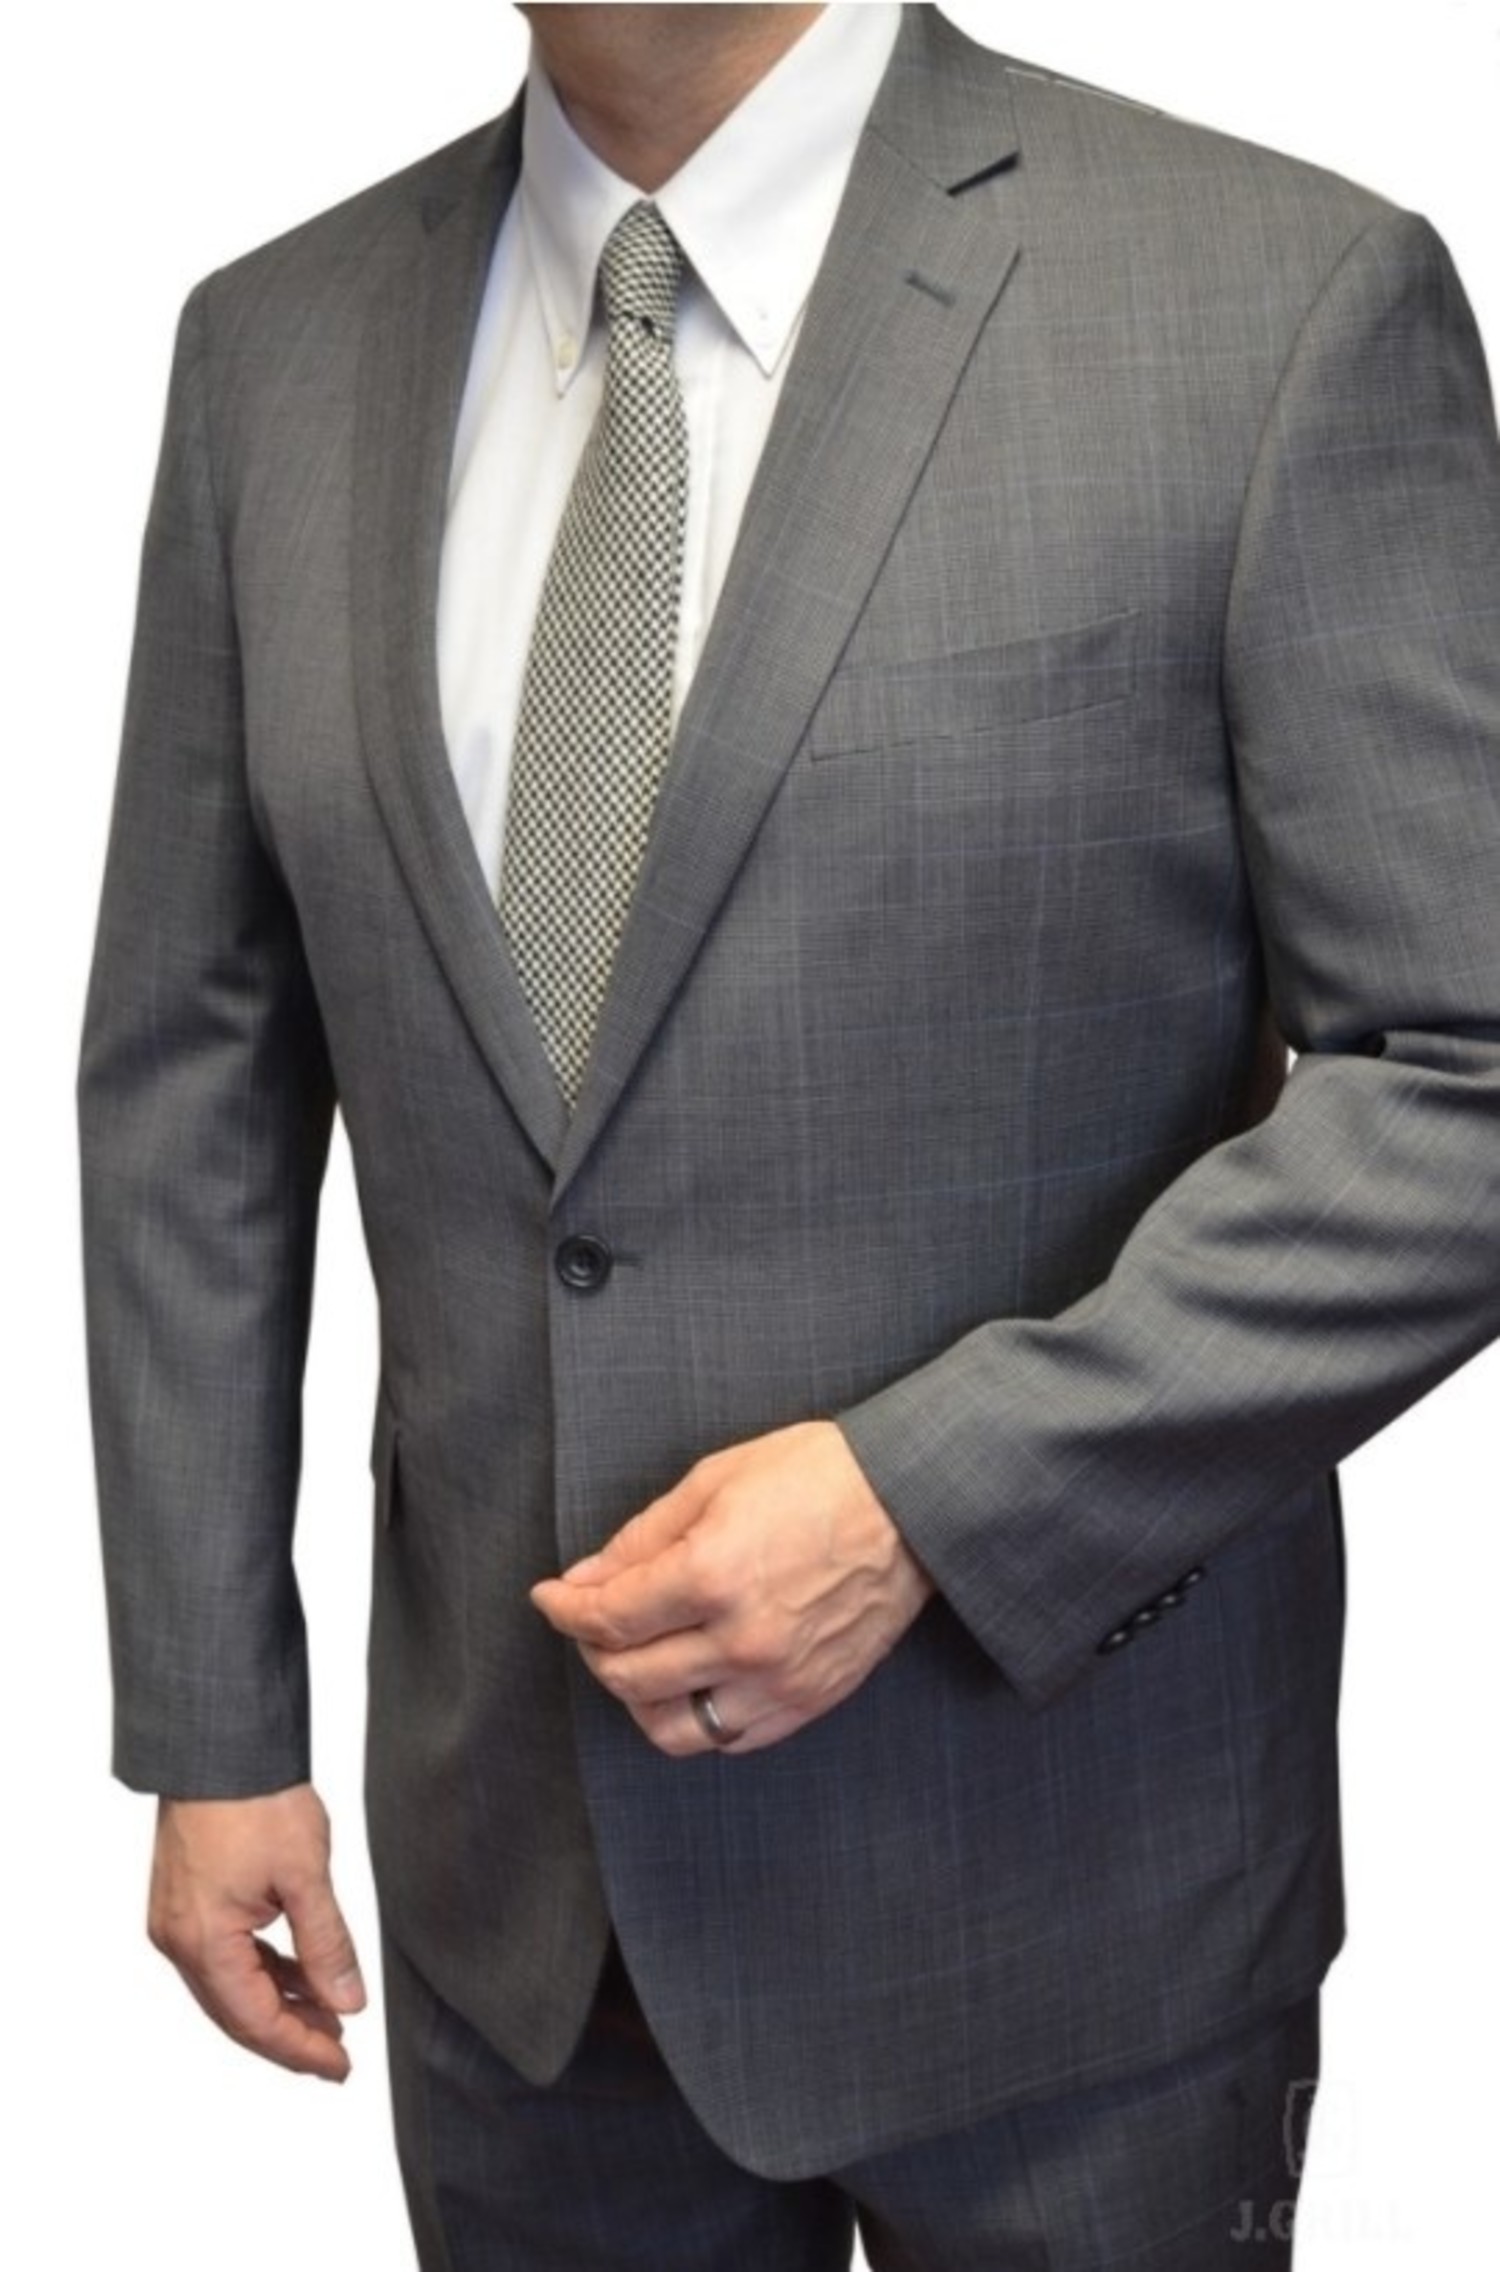 https://cdn.shoplightspeed.com/shops/632629/files/24818828/1500x4000x3/jgrill-glencheck-wool-2-piece-suit.jpg